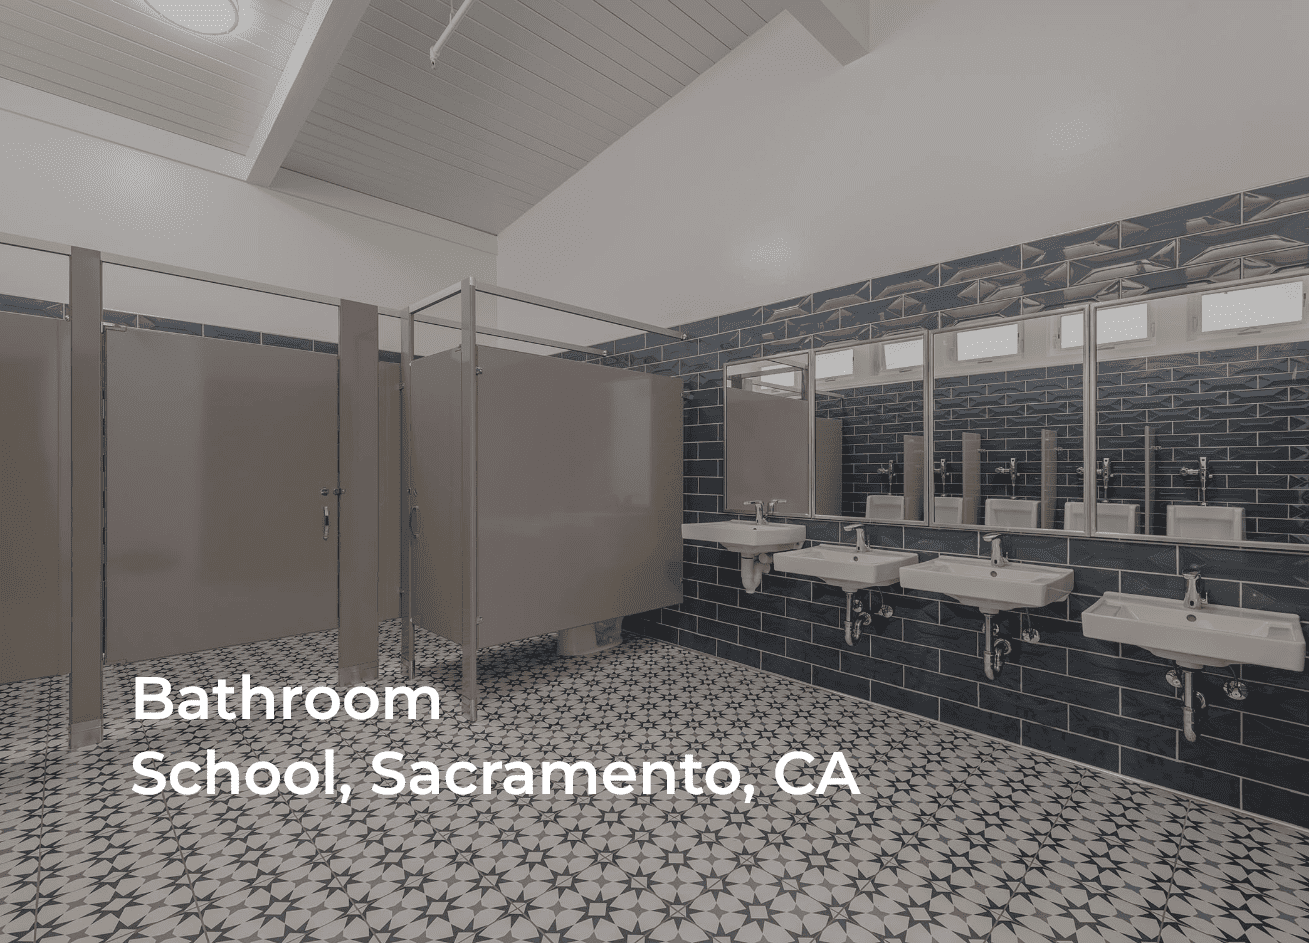 Sacramento CA school restroom tile installation project